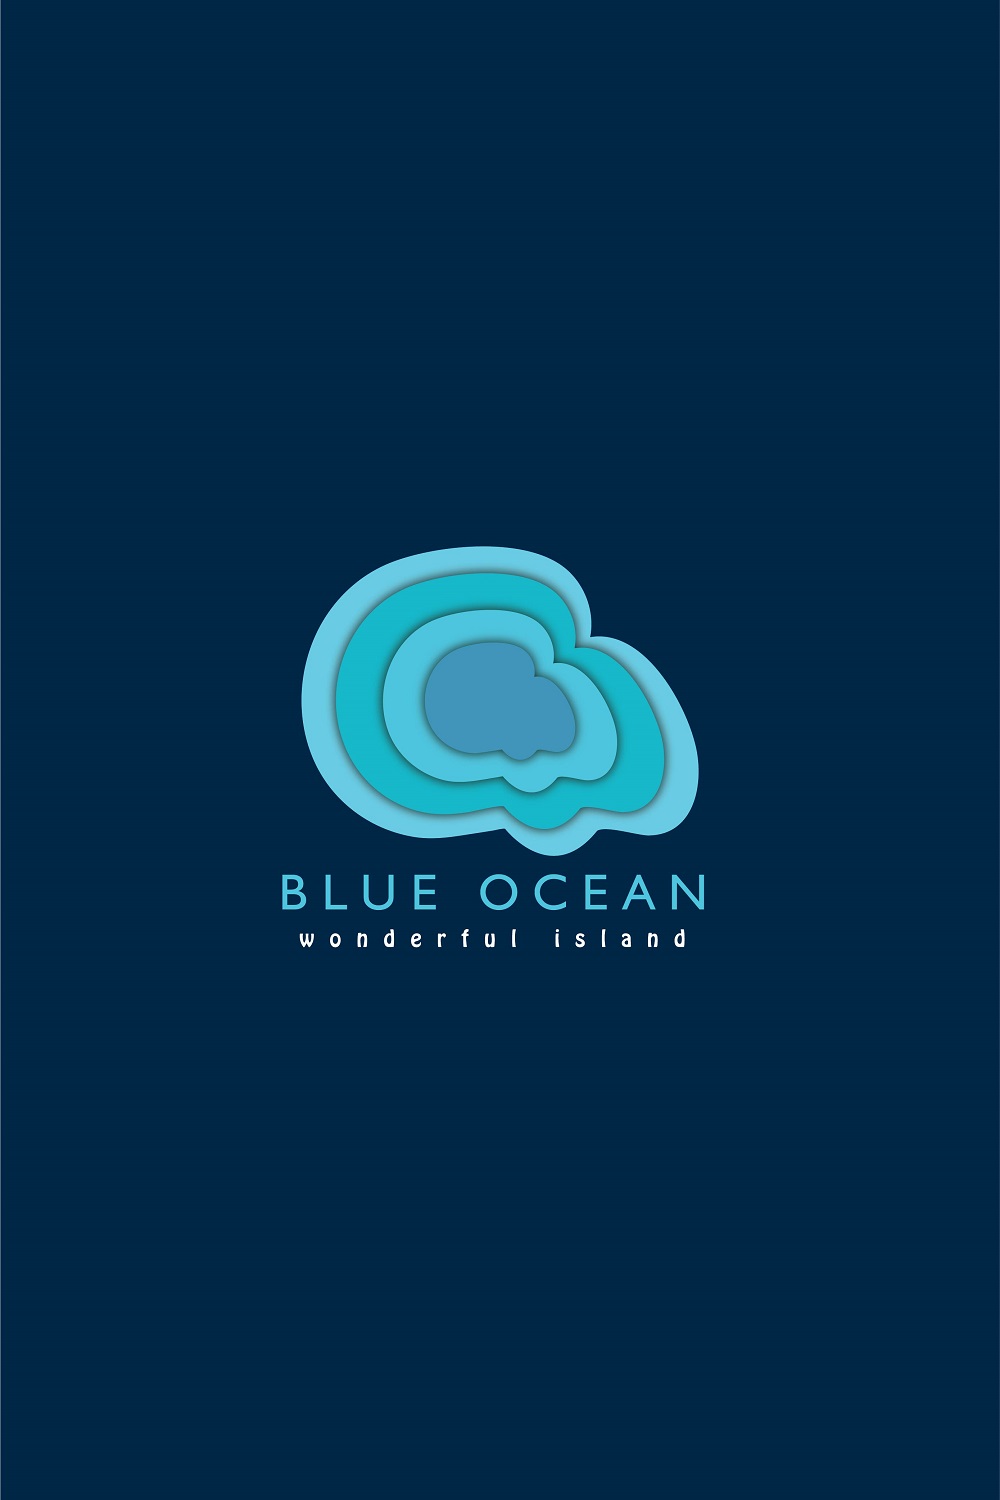 BLUE OCEAN ICON pinterest preview image.